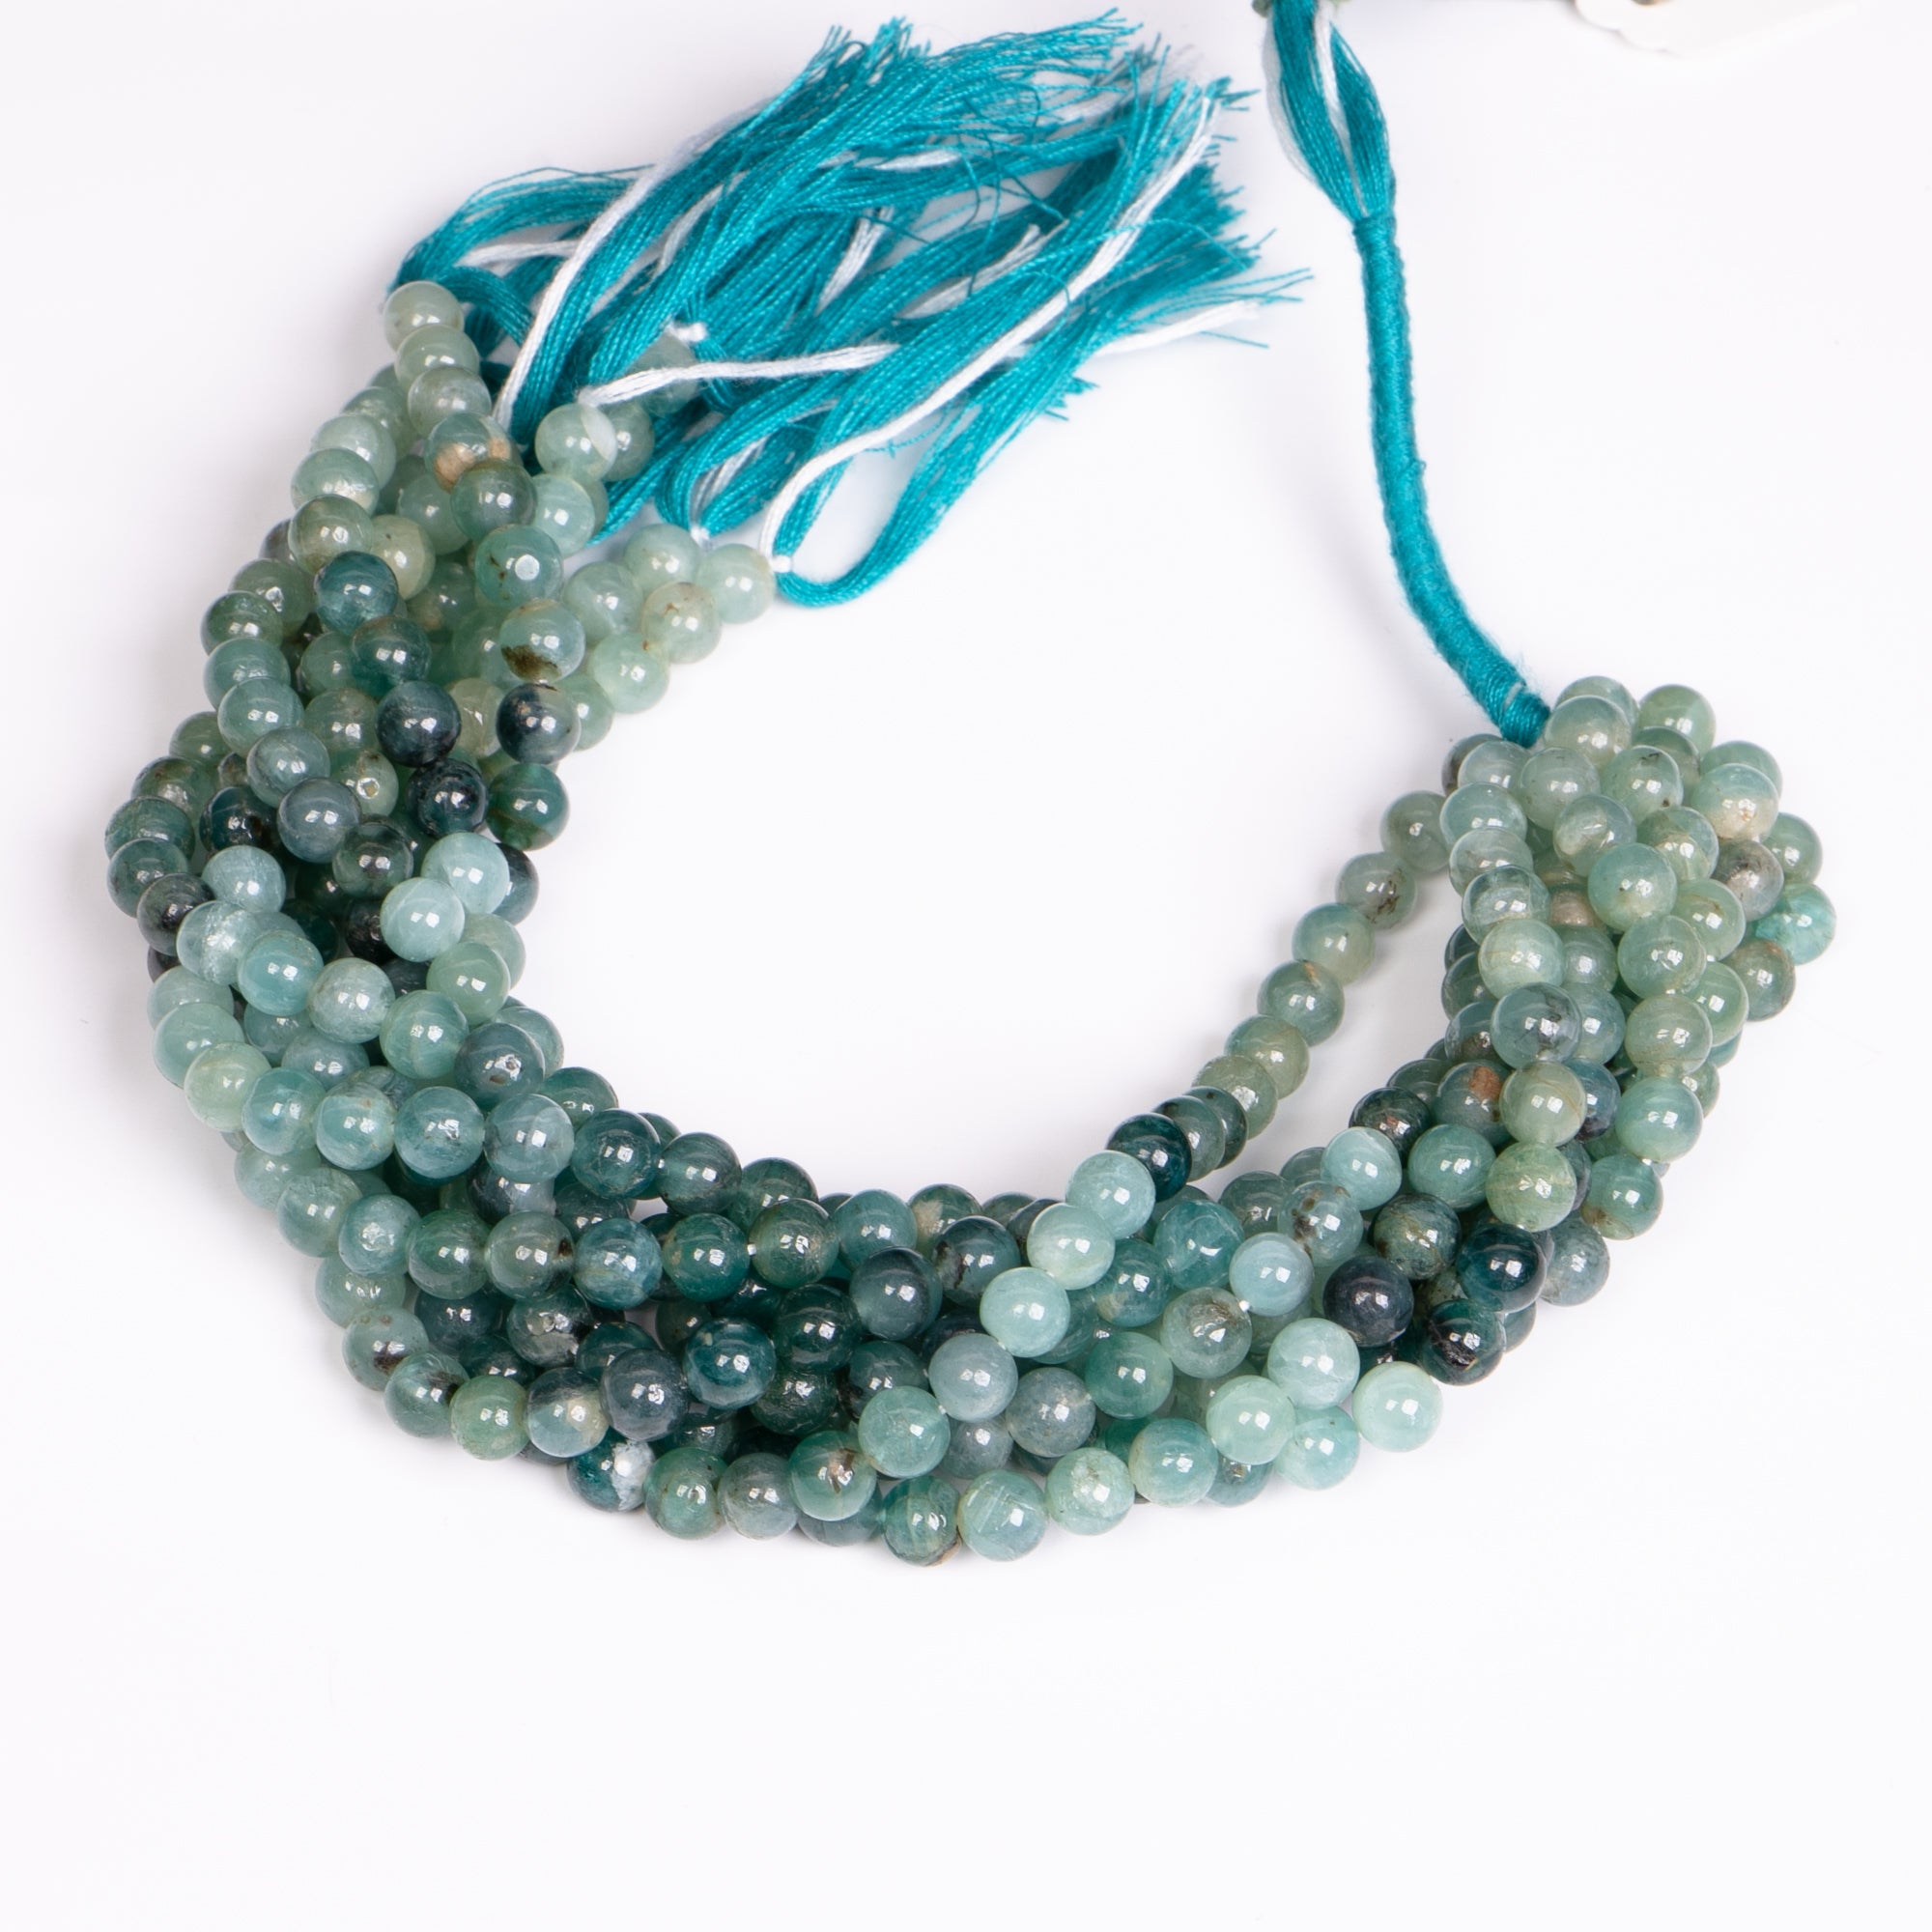 Natural Round Grandidierite Smooth Balls Loose Beads, TGS-0413